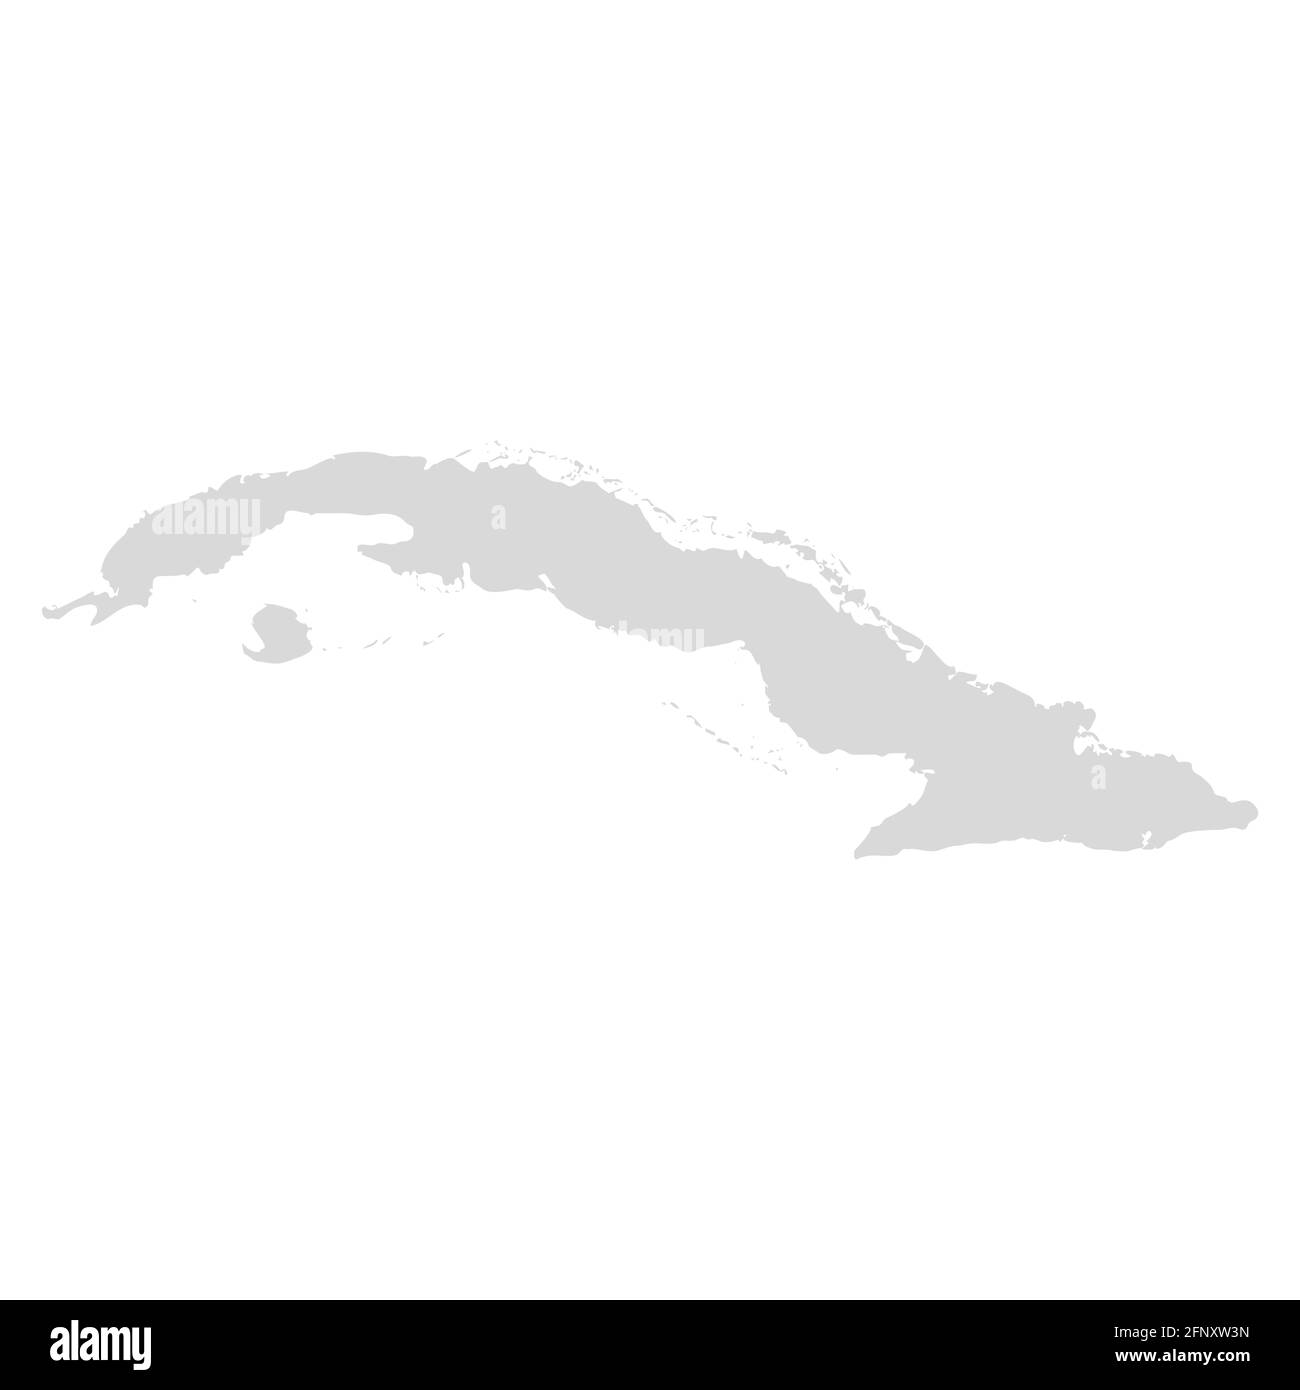 Cuba vector map. Bahamas caribbean area cuba island havana city map Stock Vector